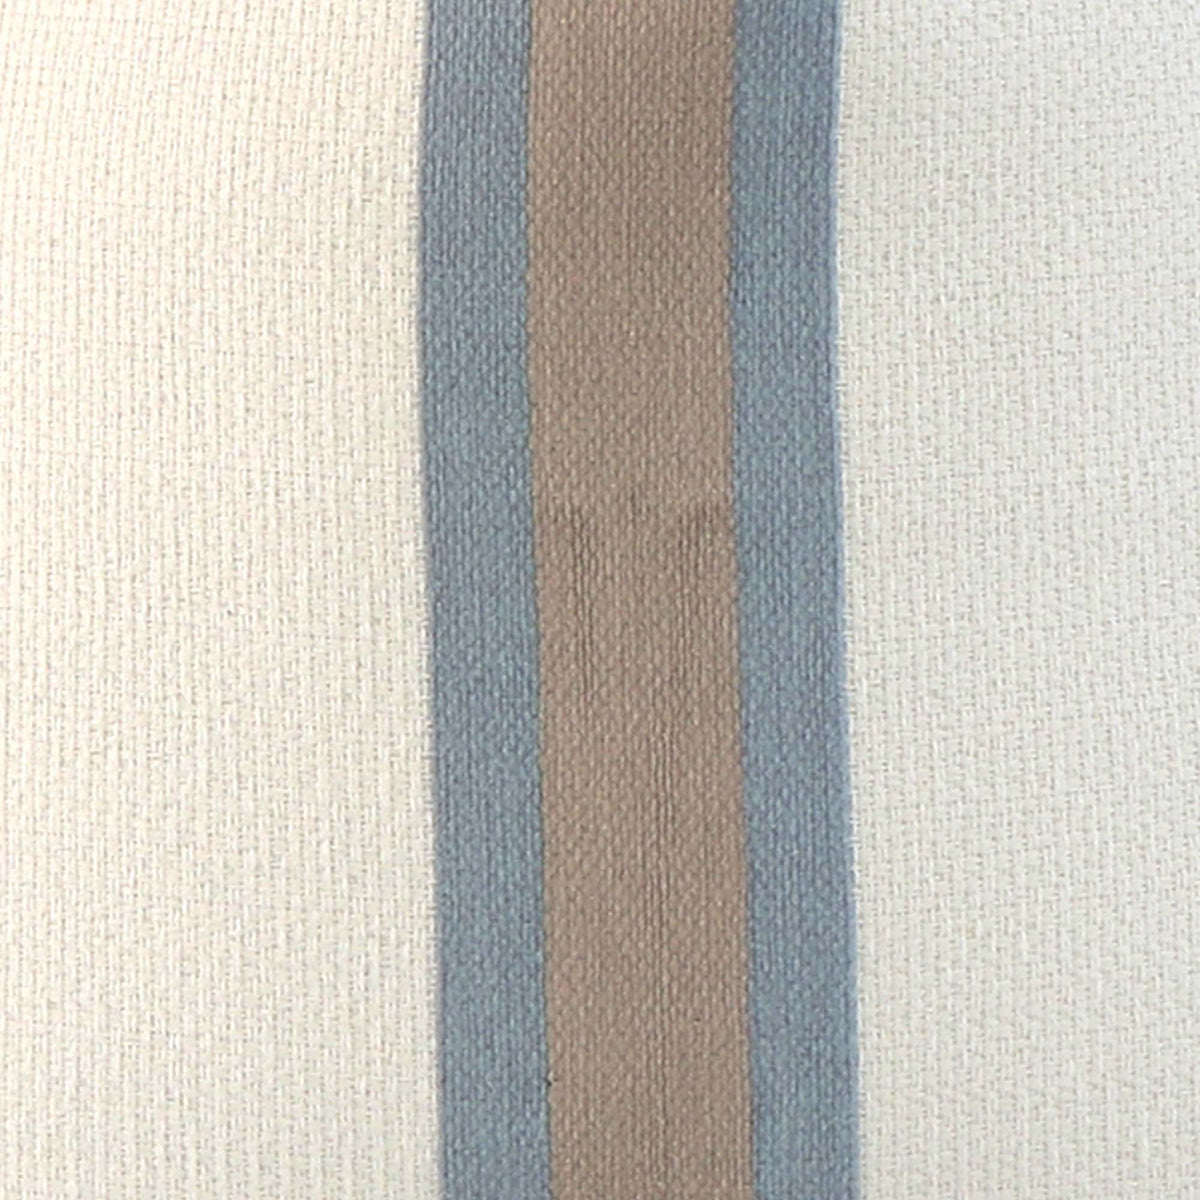 Abito Stripe Powder / 4x4 inch Fabric Swatch